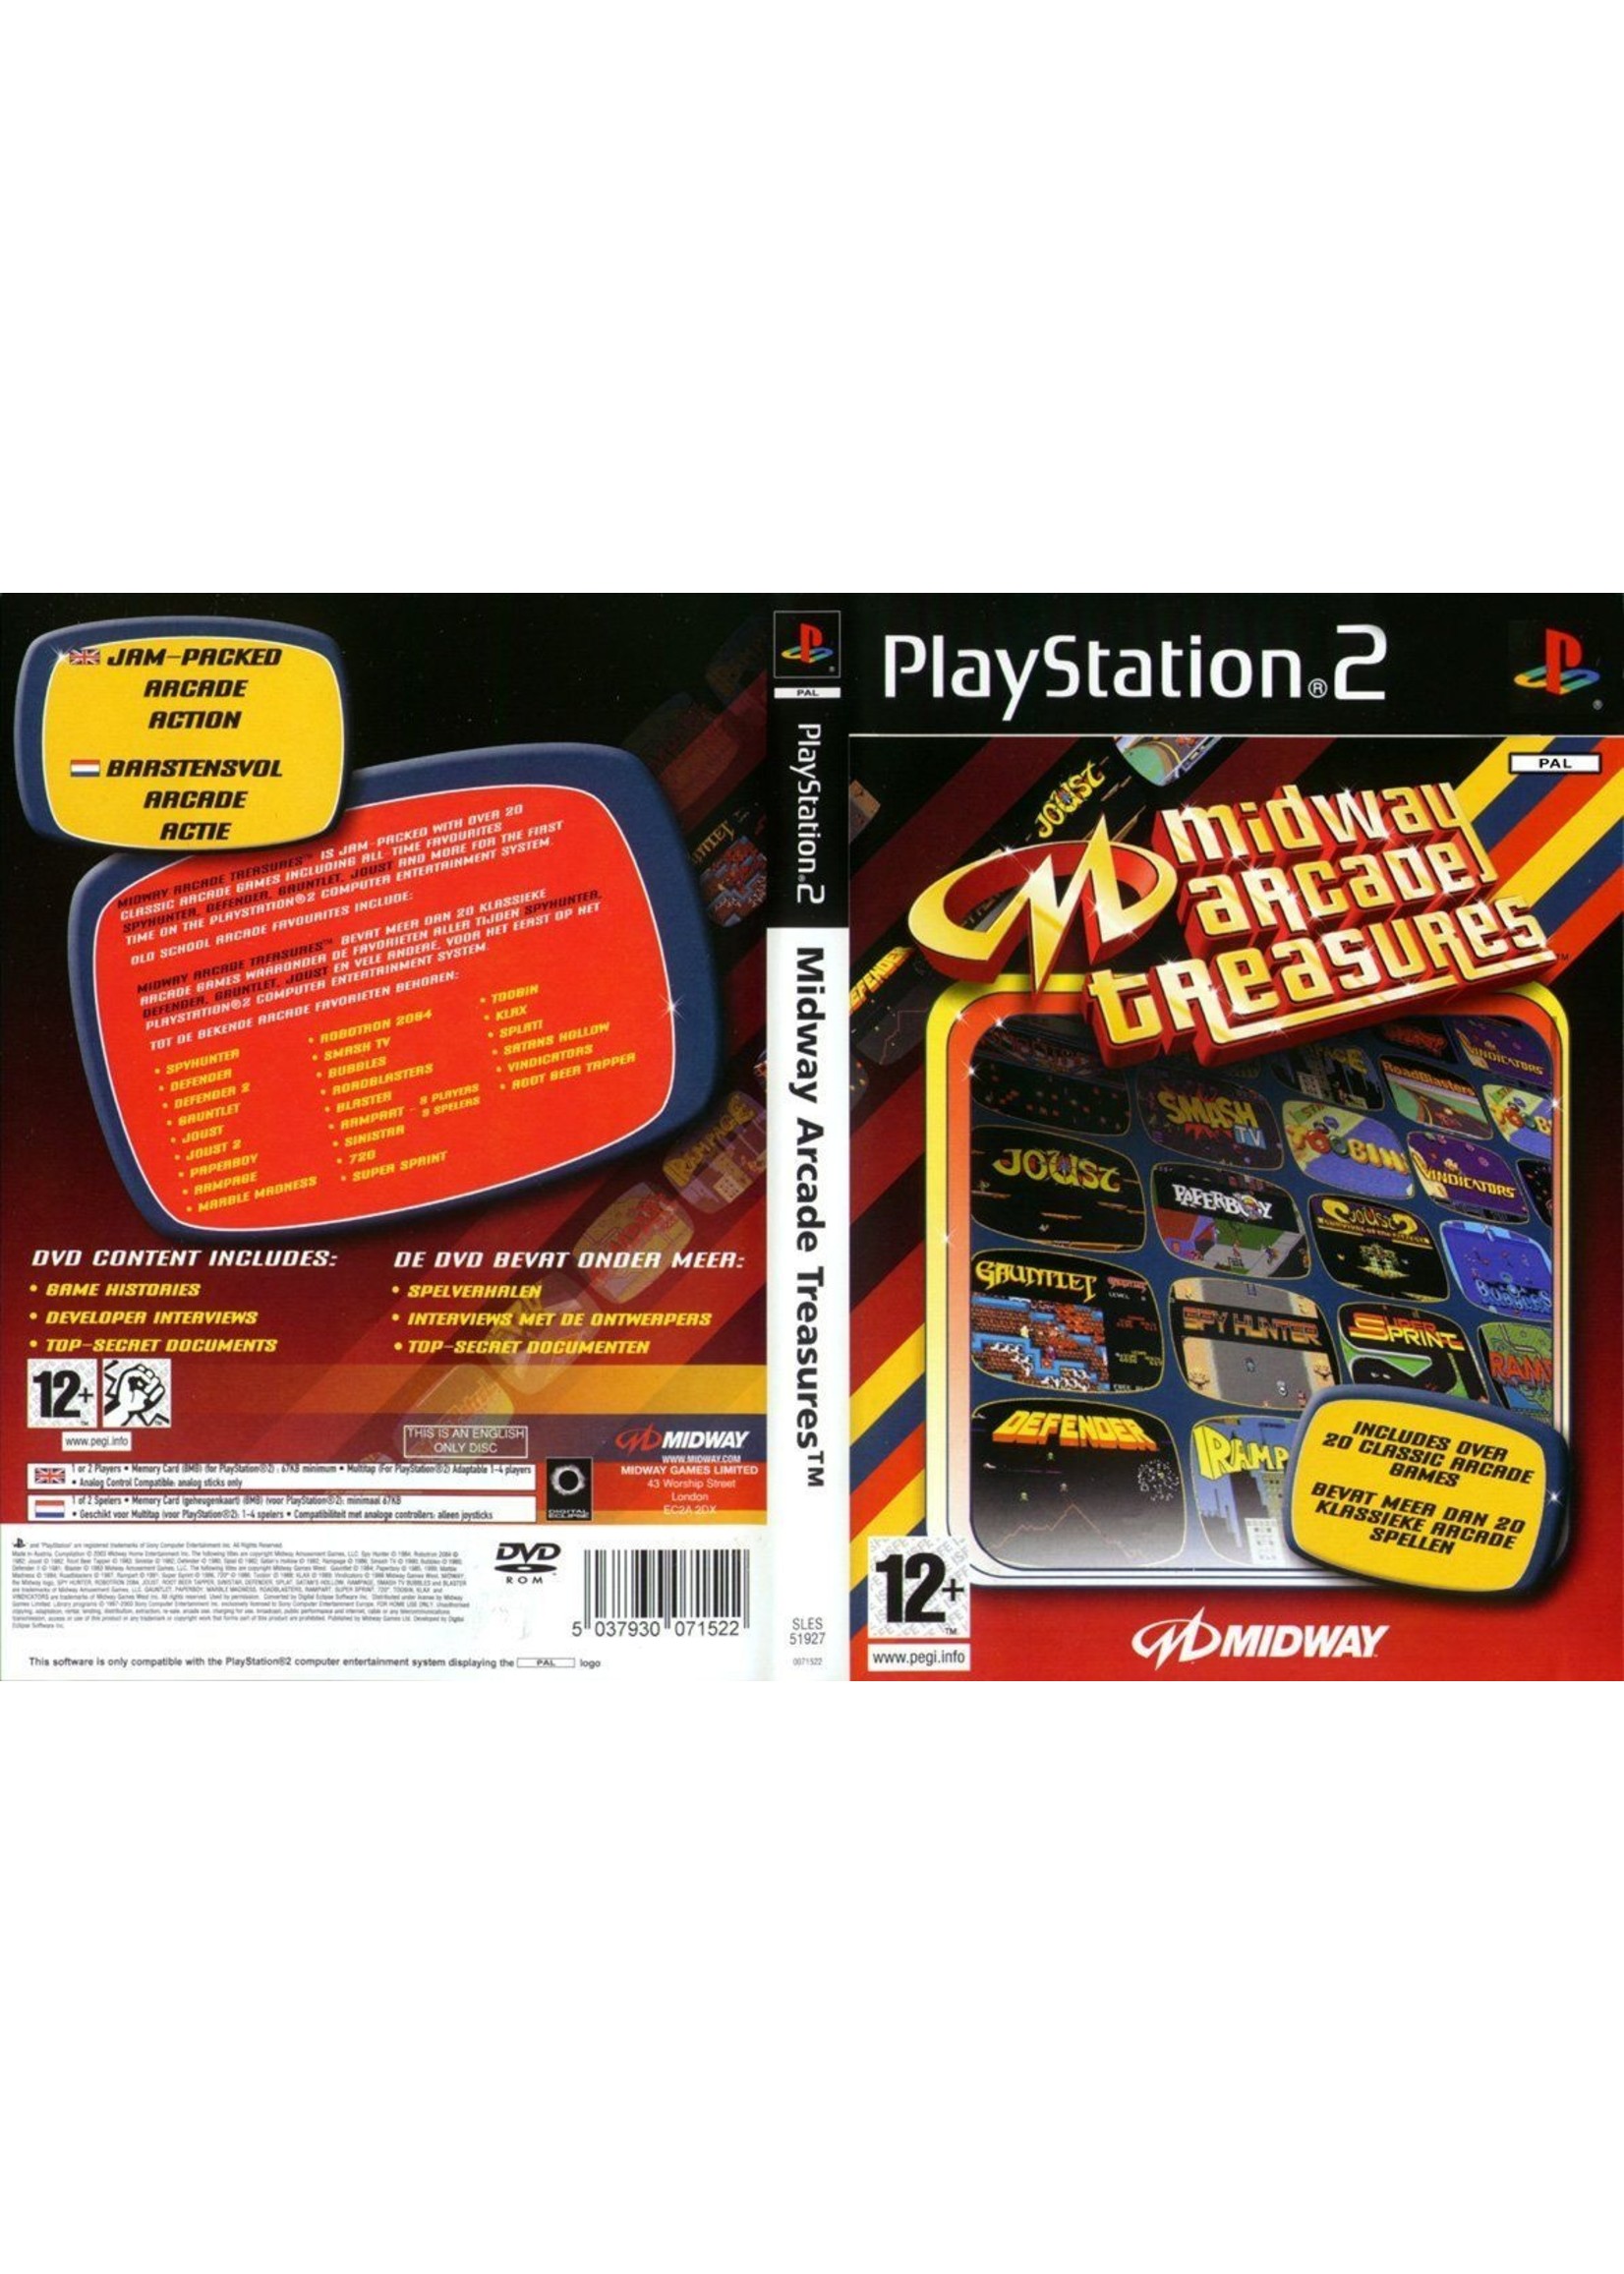 Sony Playstation 2 (PS2) Midway Arcade Treasures